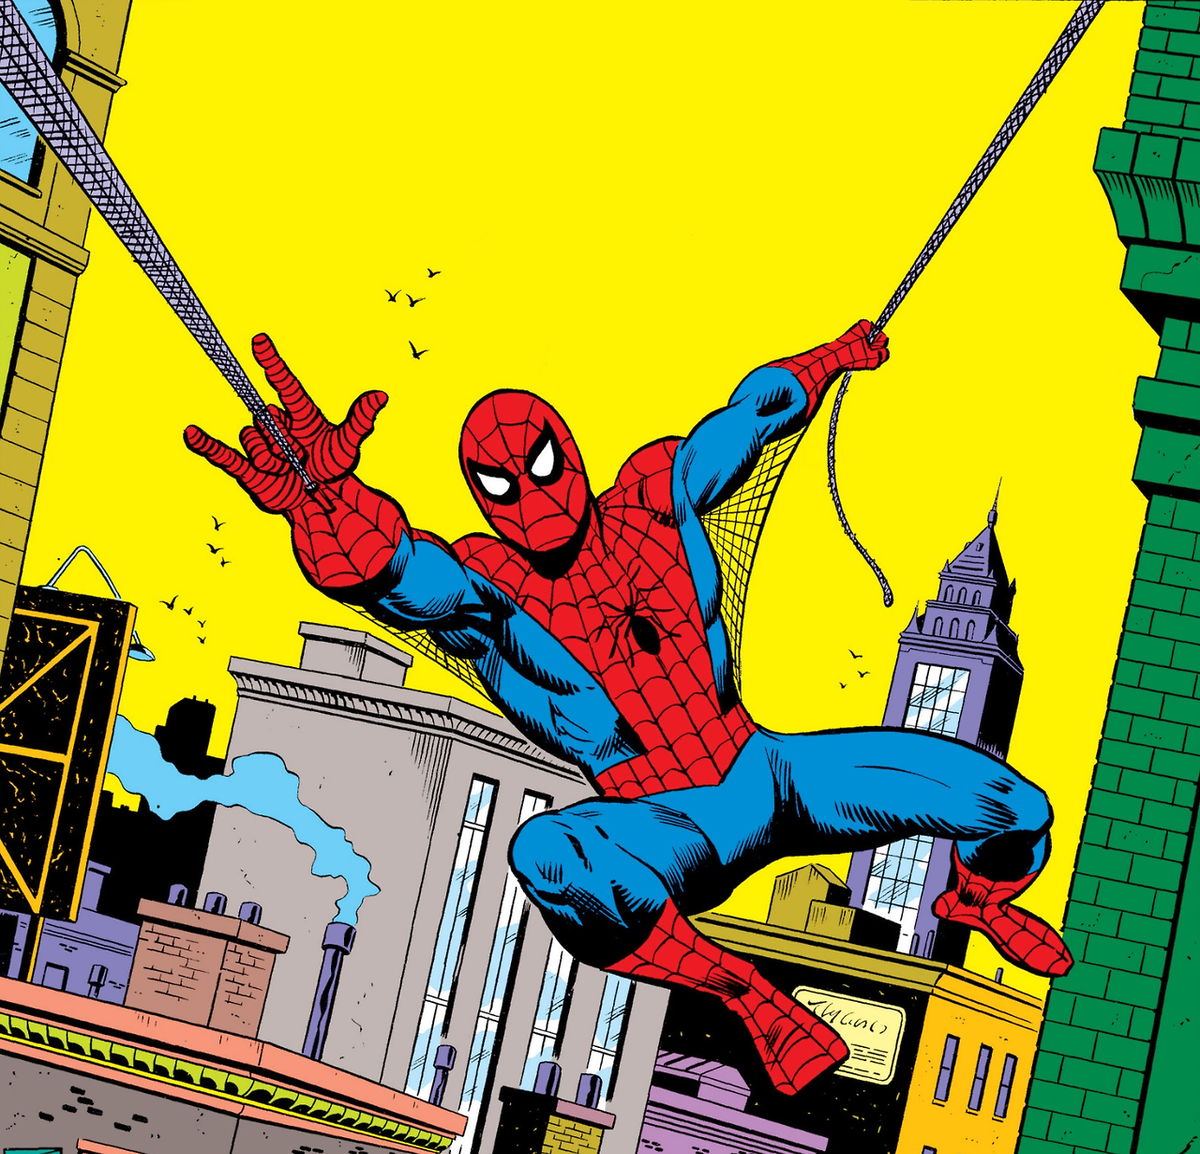 Паука комикс. Комиксный человек паук классический. Комиксы Марвел Spider man. Человек паук из комиксов Марвел. Спайдер Мэн комикс.